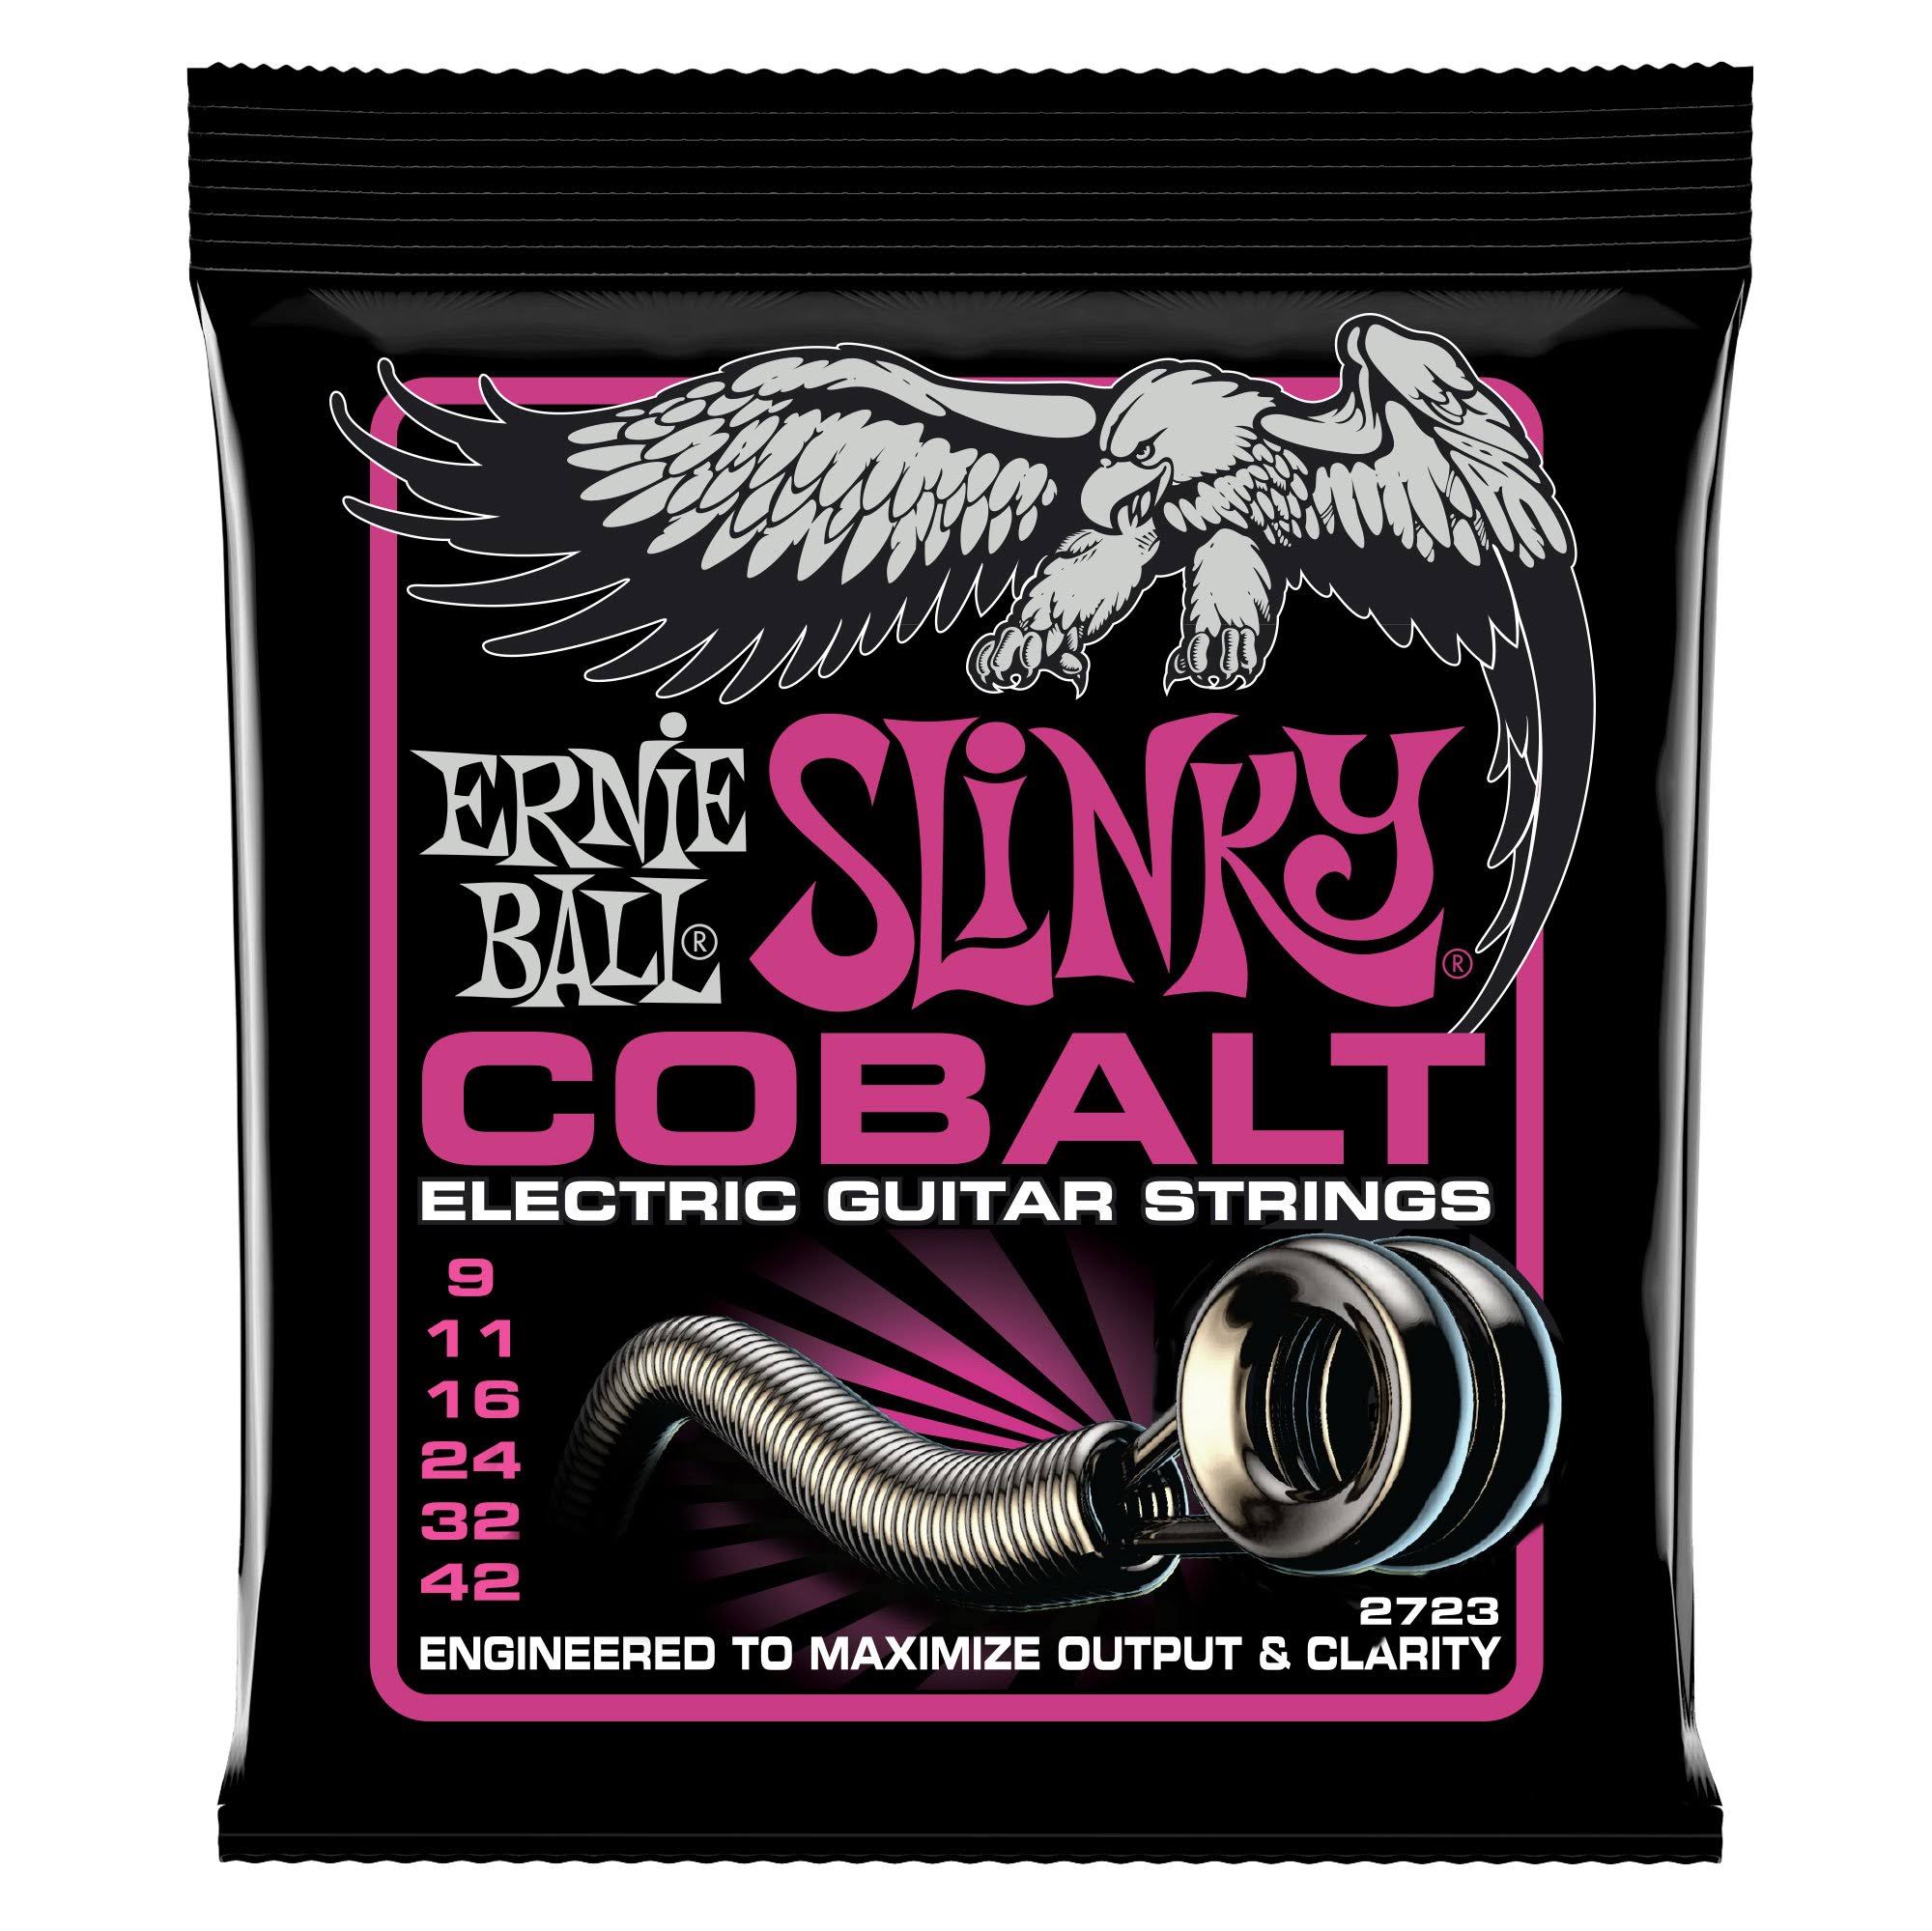 Ernie Ball Slinky Cobalt Electric Guitar Strings